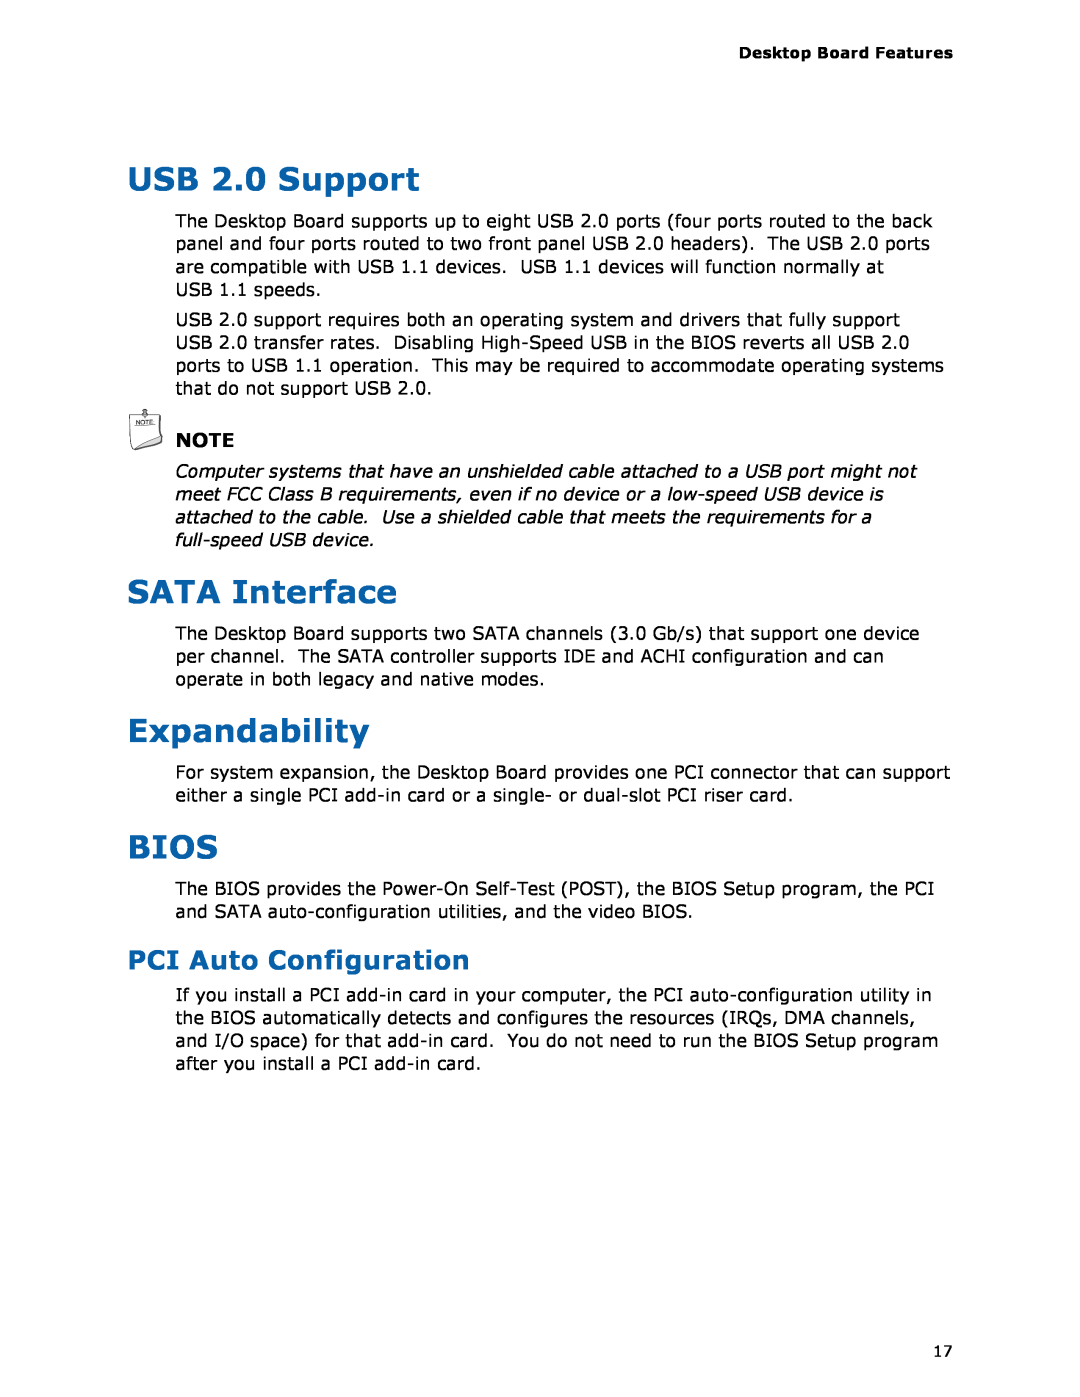 Intel D425KT manual USB 2.0 Support, SATA Interface, Expandability, Bios, PCI Auto Configuration 